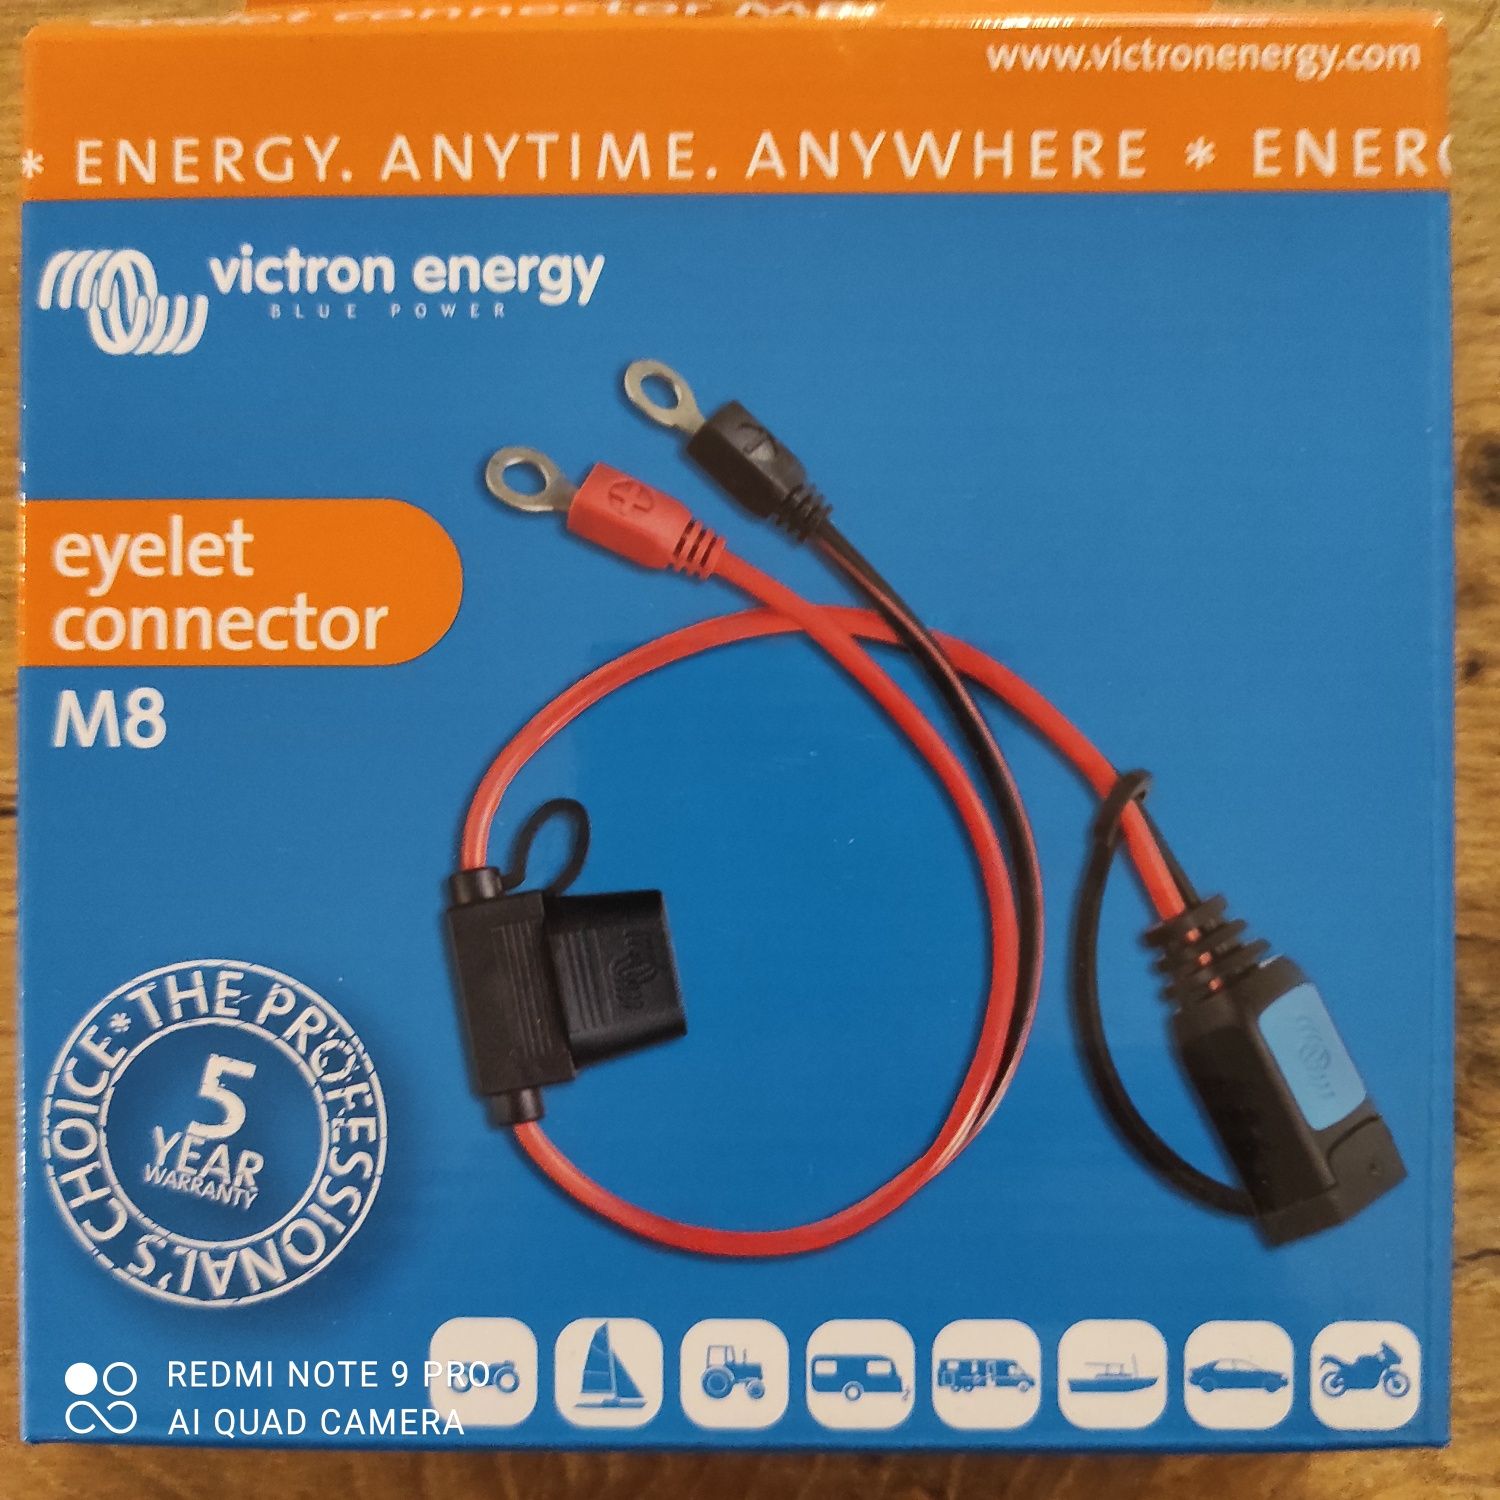 Victron Energy M8 Eyelet connector (30A ATO fuse) Ładowarki Blue Smart